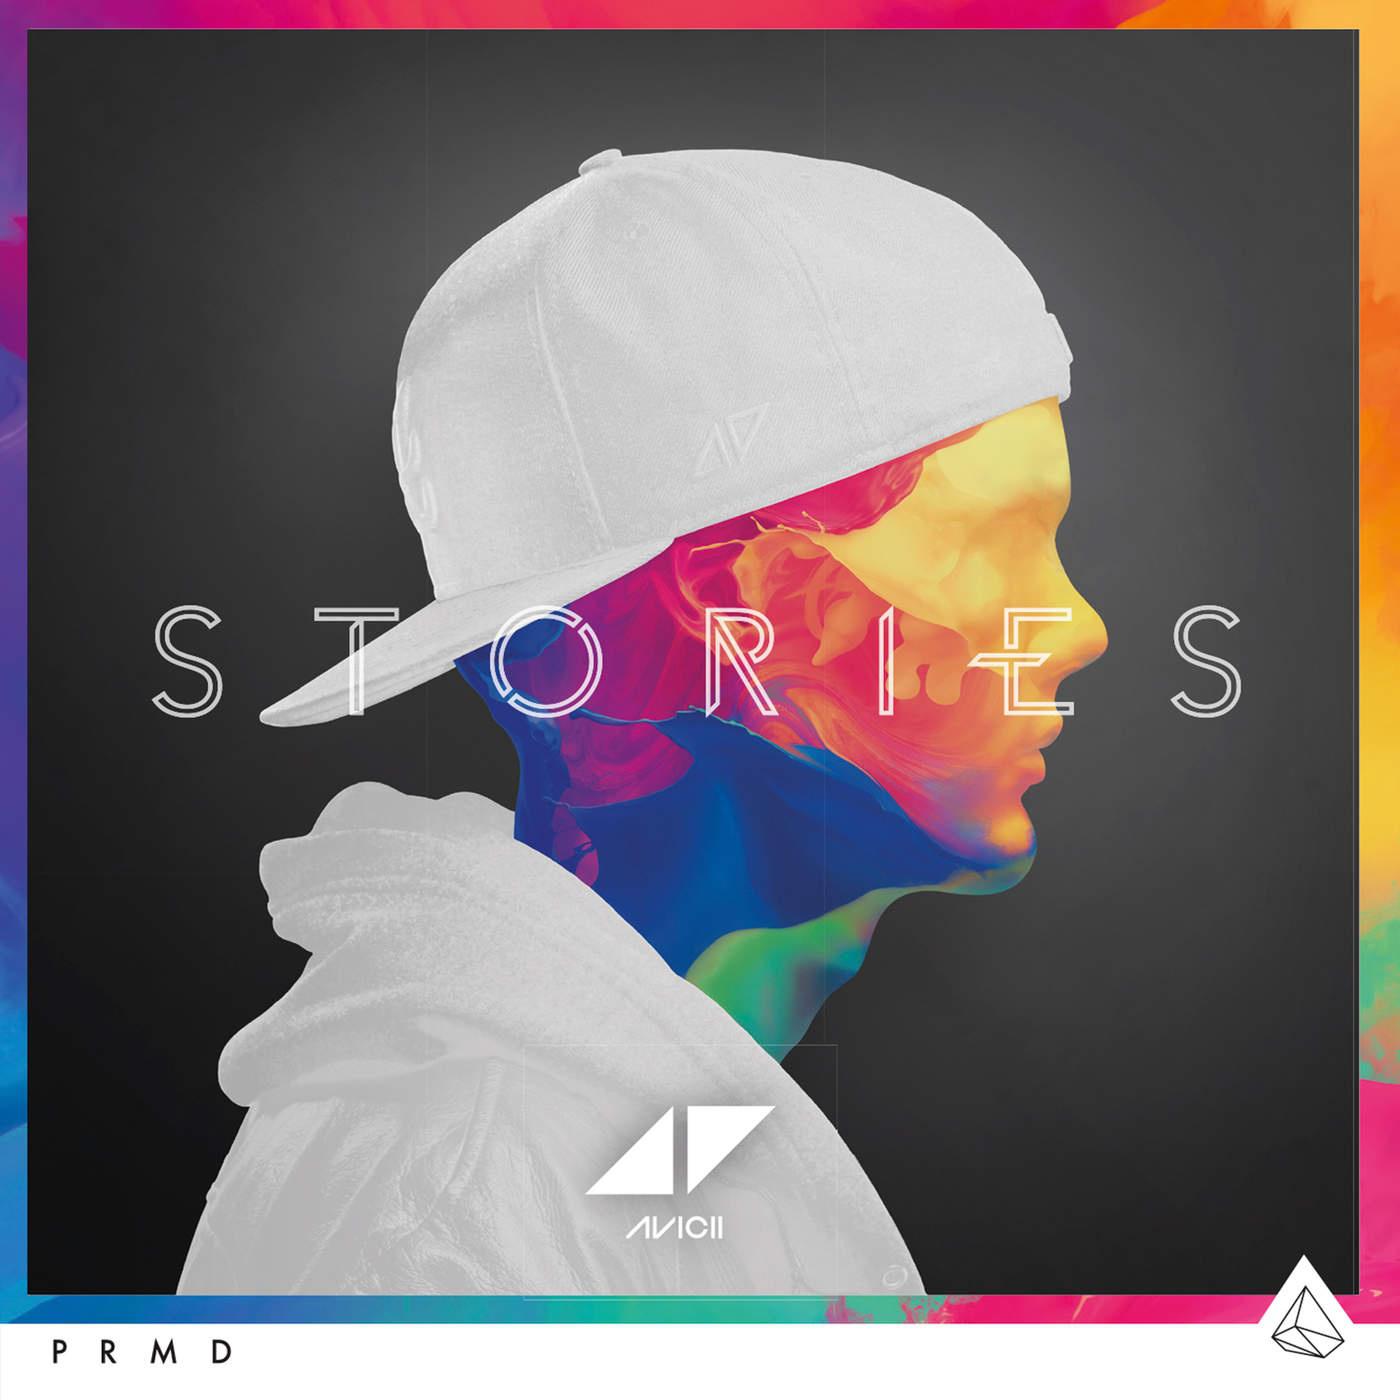 Sunset Jesus歌词 歌手Avicii / Sandro Cavazza-专辑Stories-单曲《Sunset Jesus》LRC歌词下载